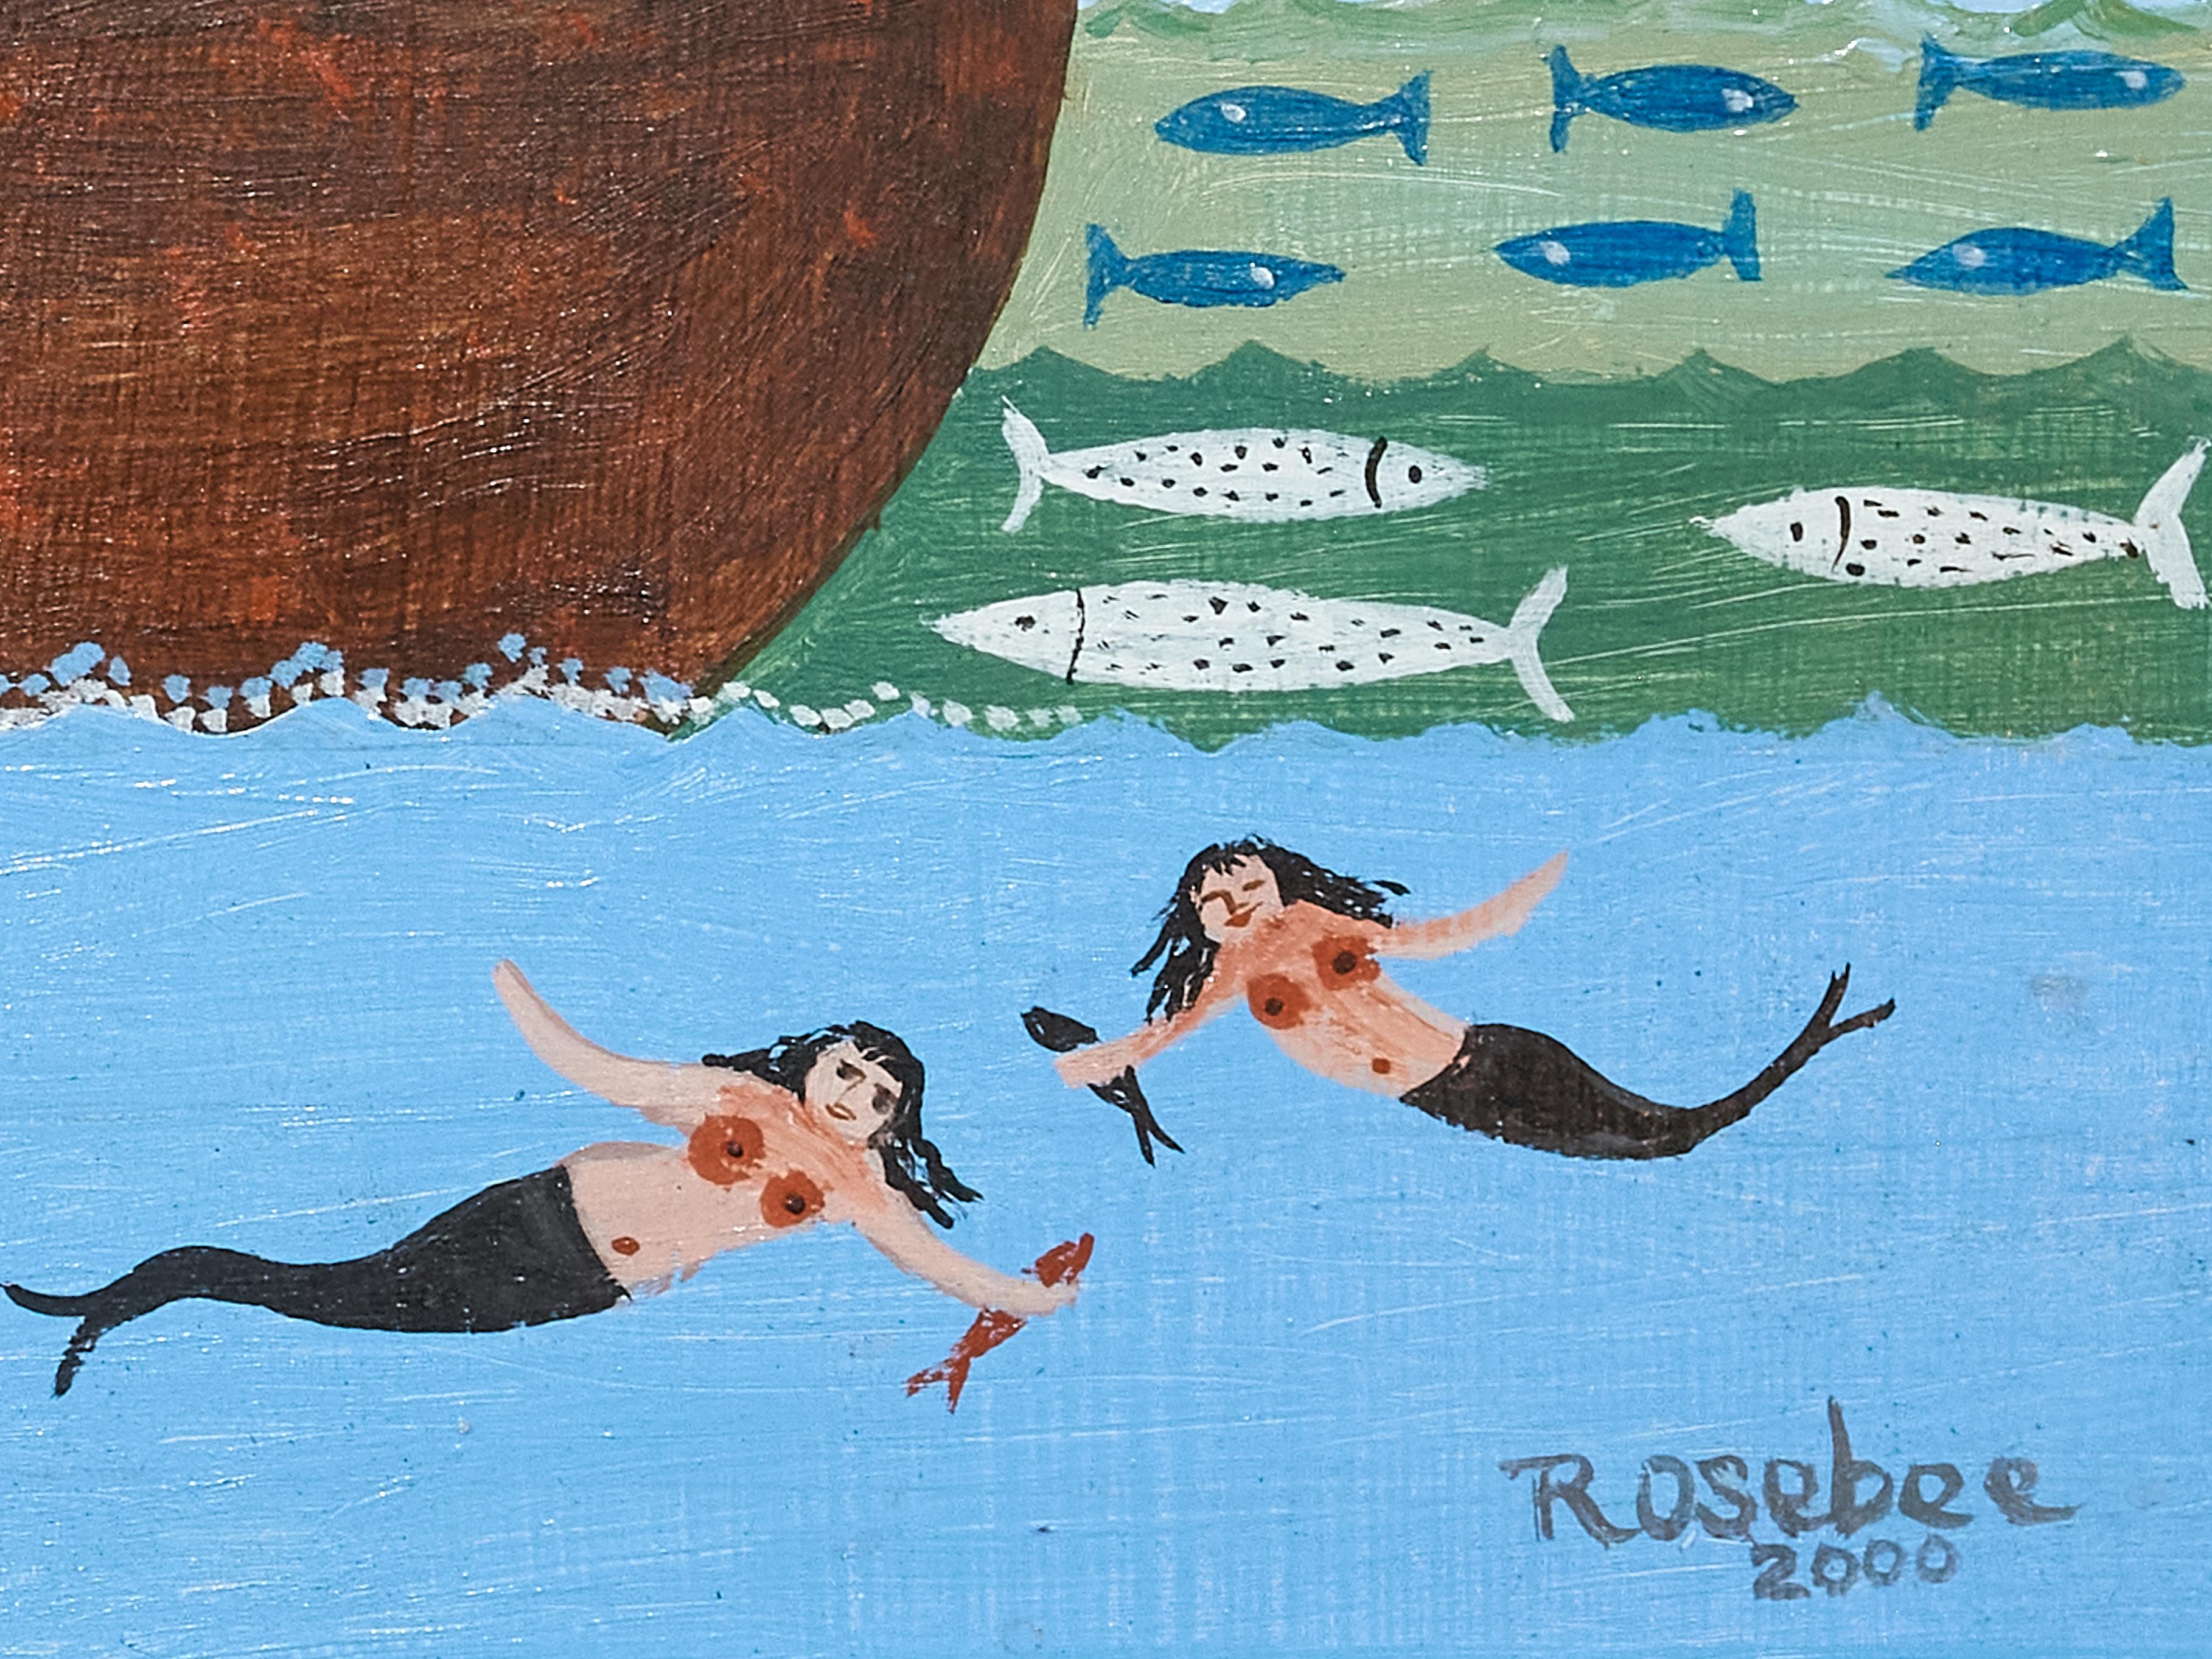 Hand-Painted Painting of Noah's Ark and Mermaids, Signed Rosebee, 2000